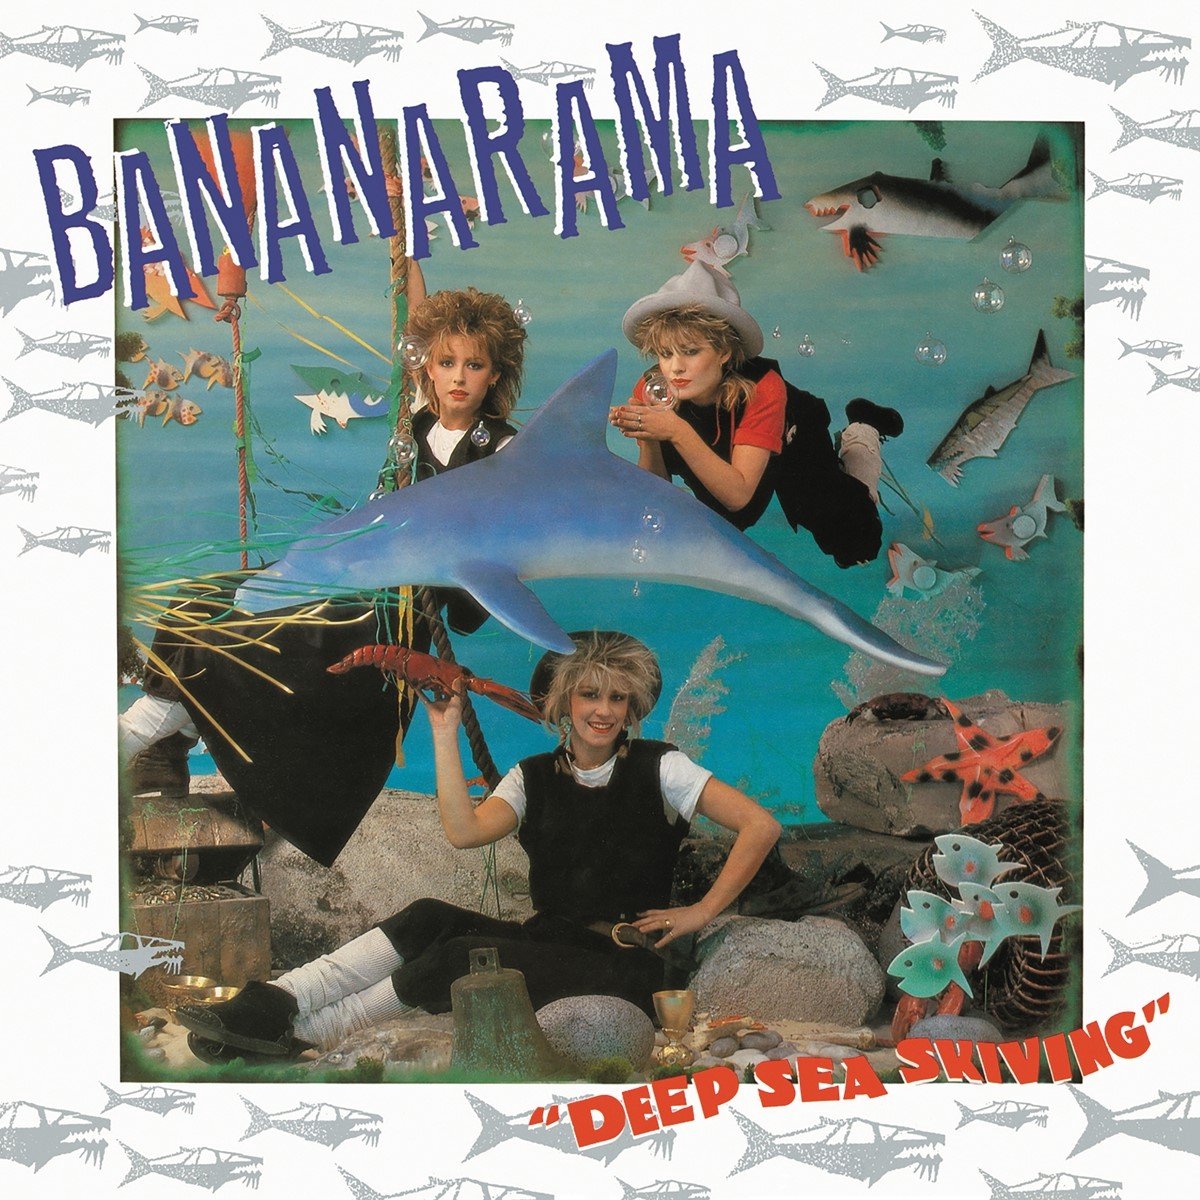 Bananarama - Deep Sea Skiving (CD) (Reissue) - Bananarama